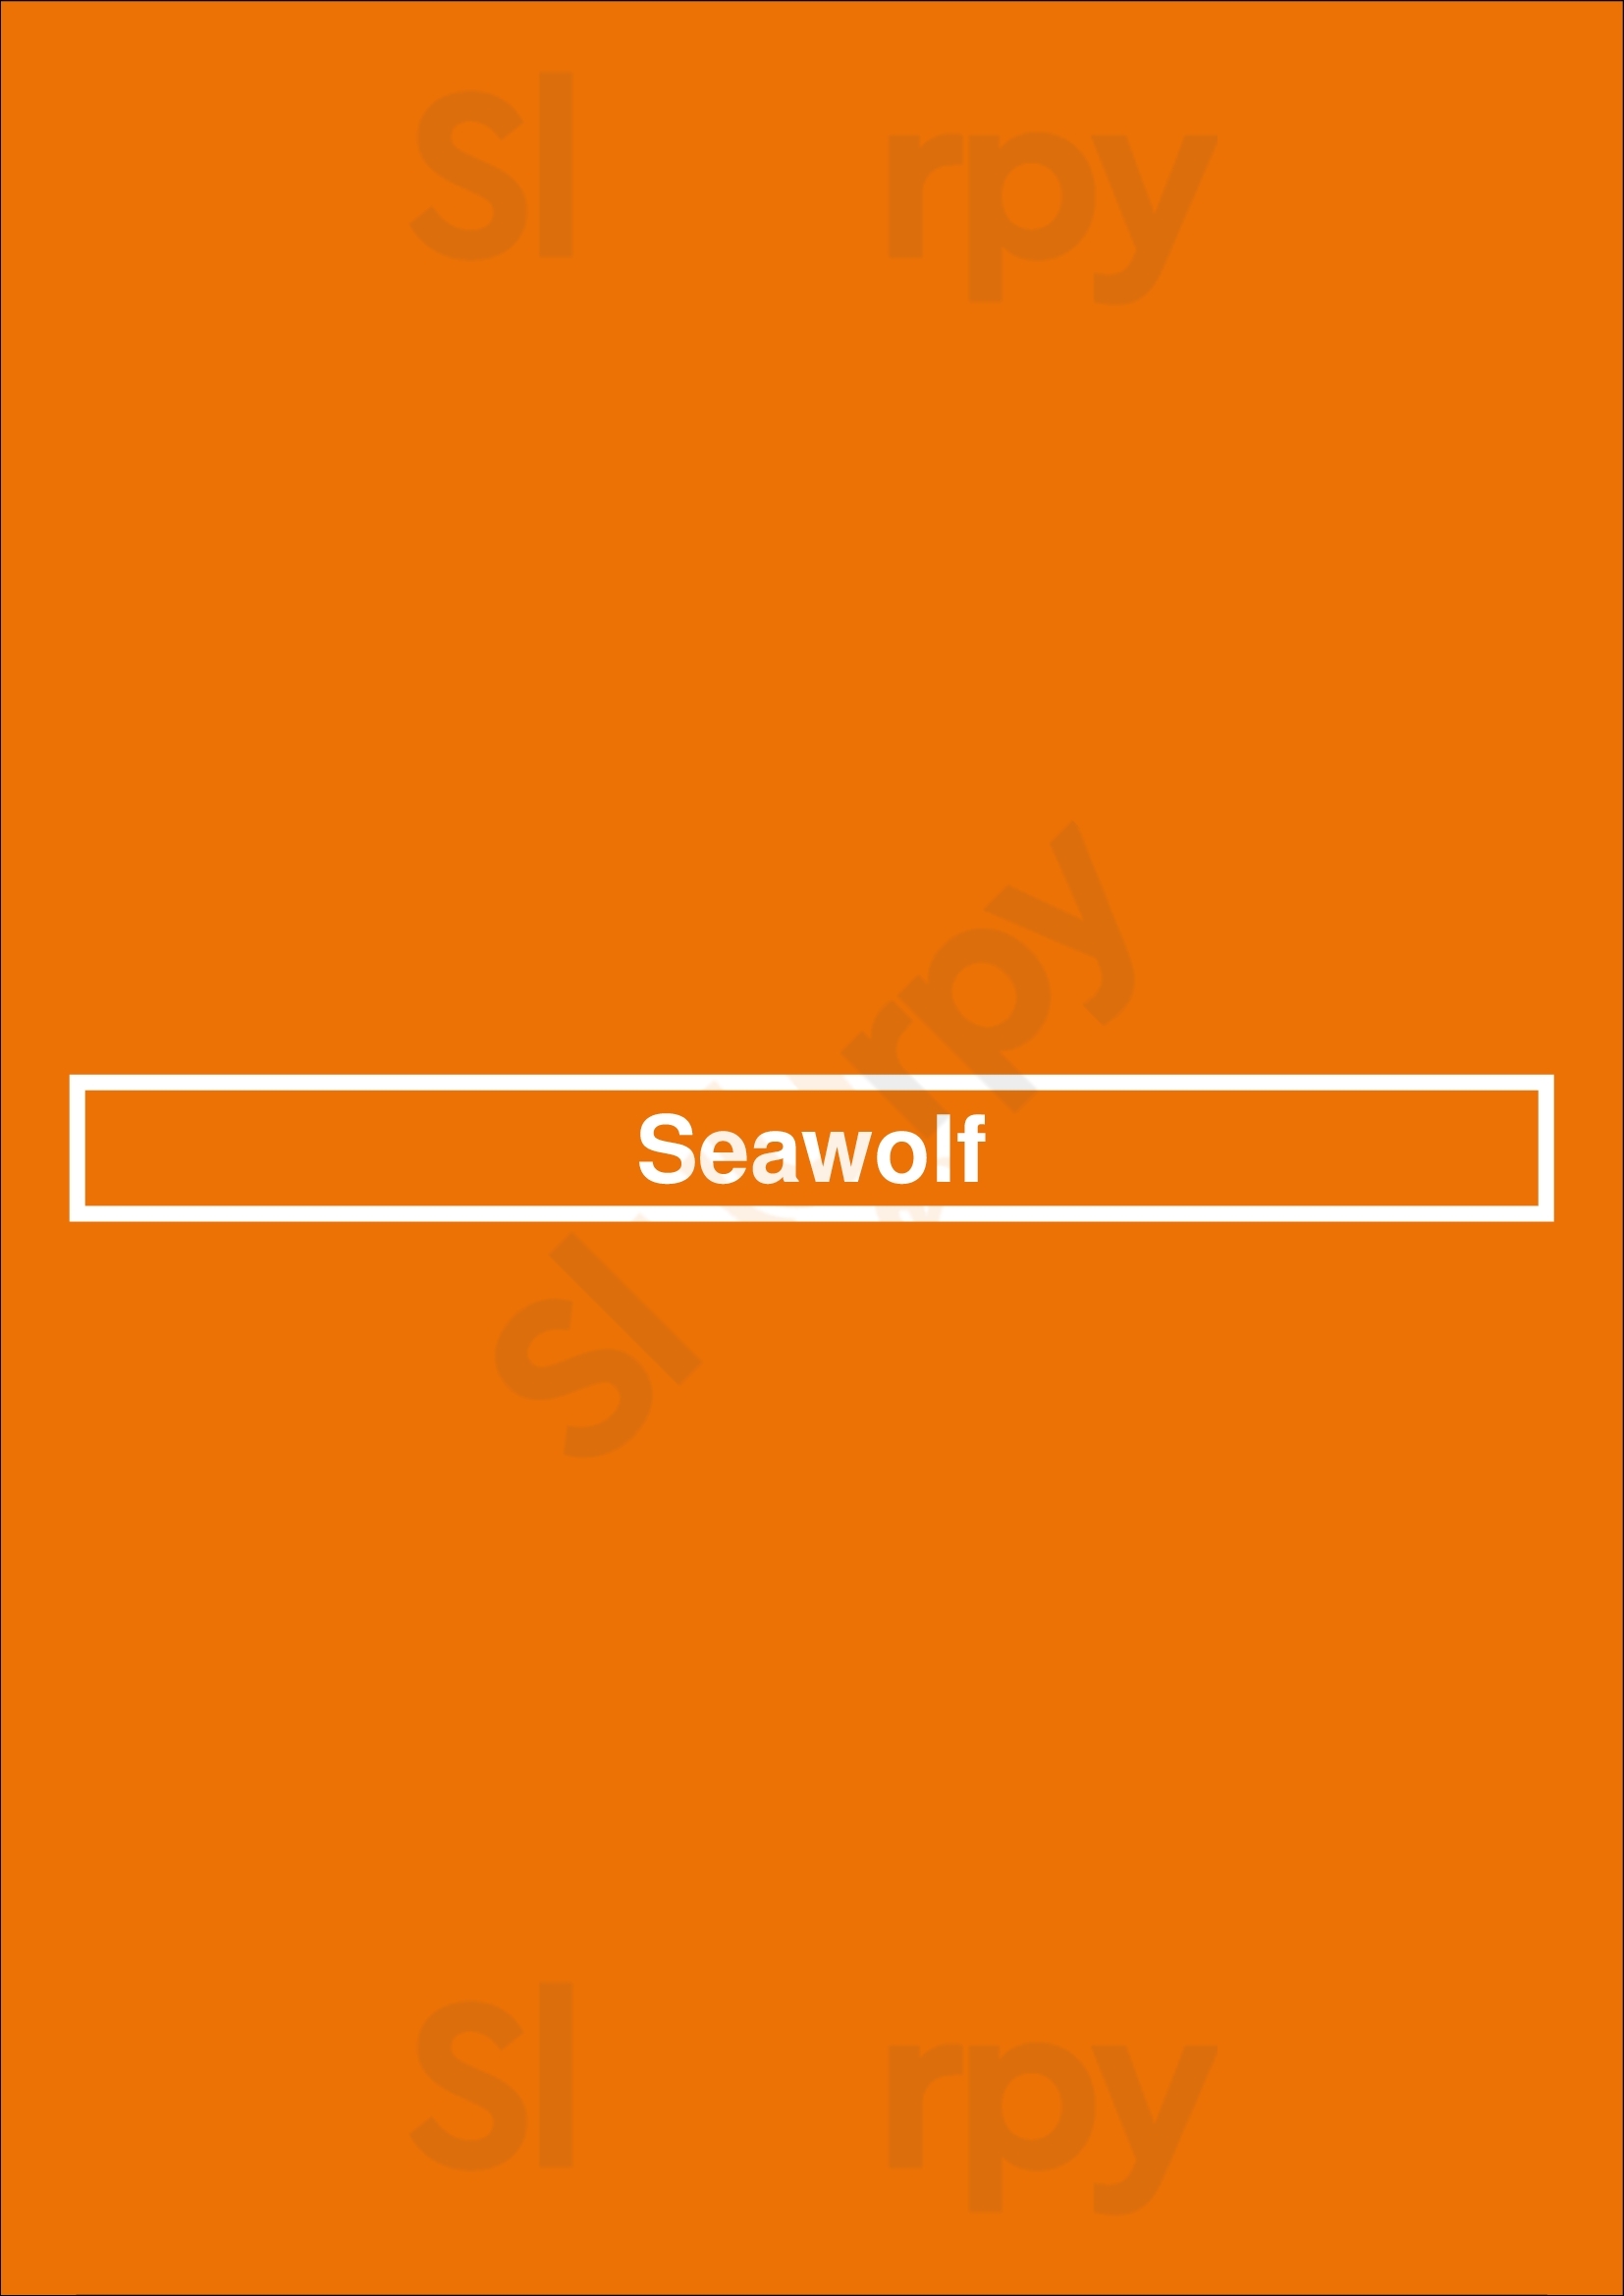 Seawolf Public House Oakland Menu - 1